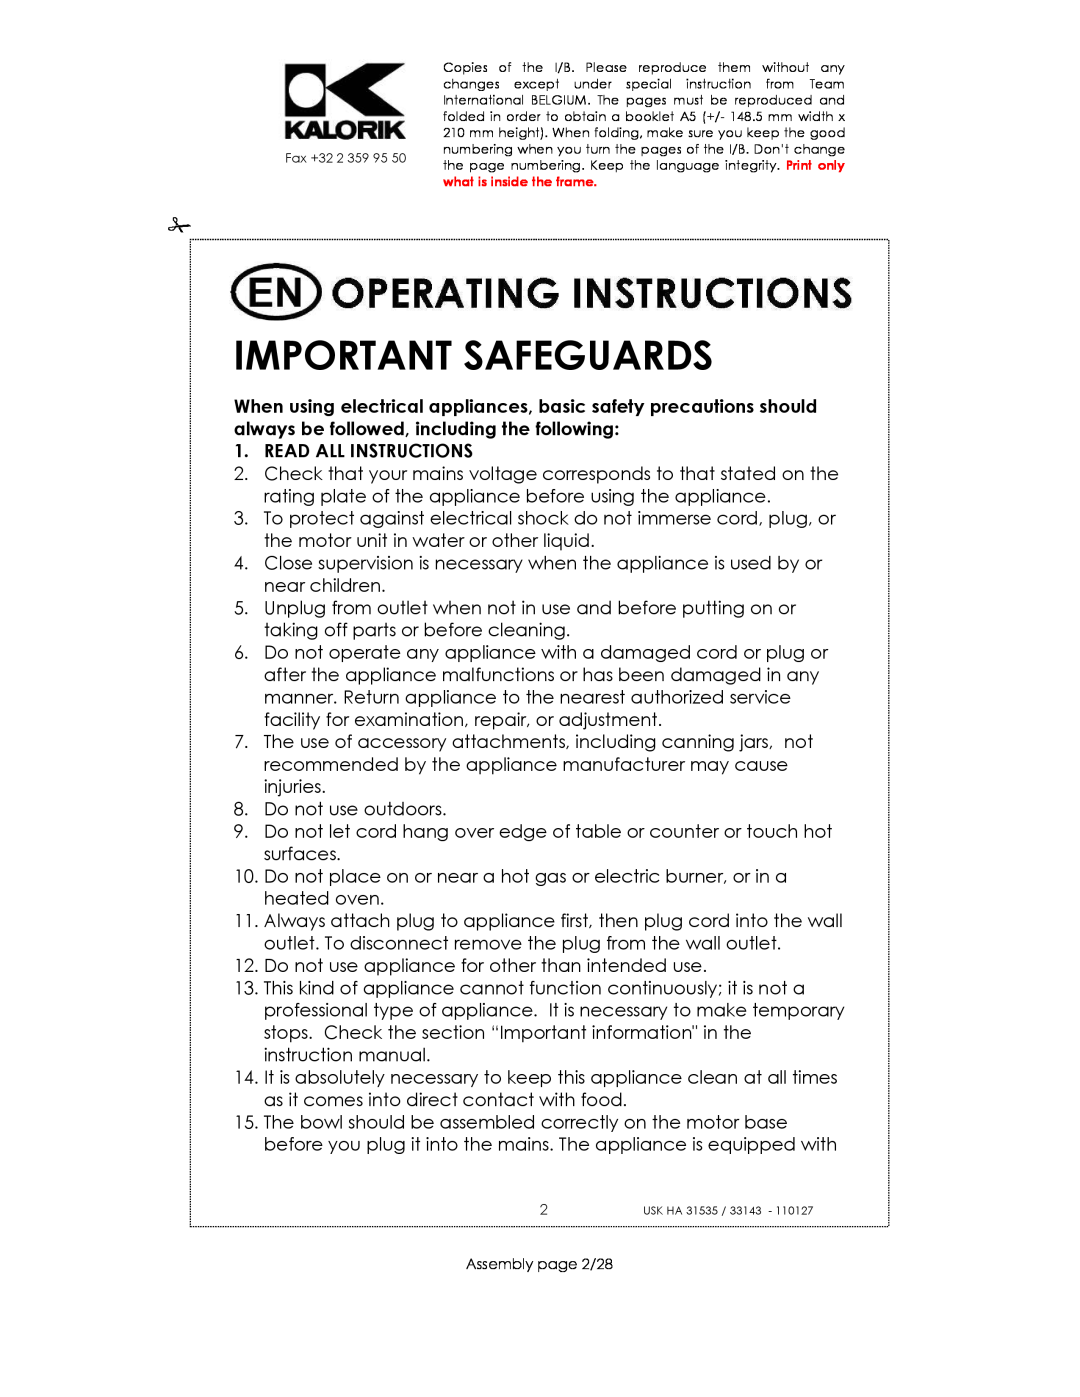 Kalorik USK HA 31535, USK HA 33143 manual Important Safeguards, Read All Instructions 